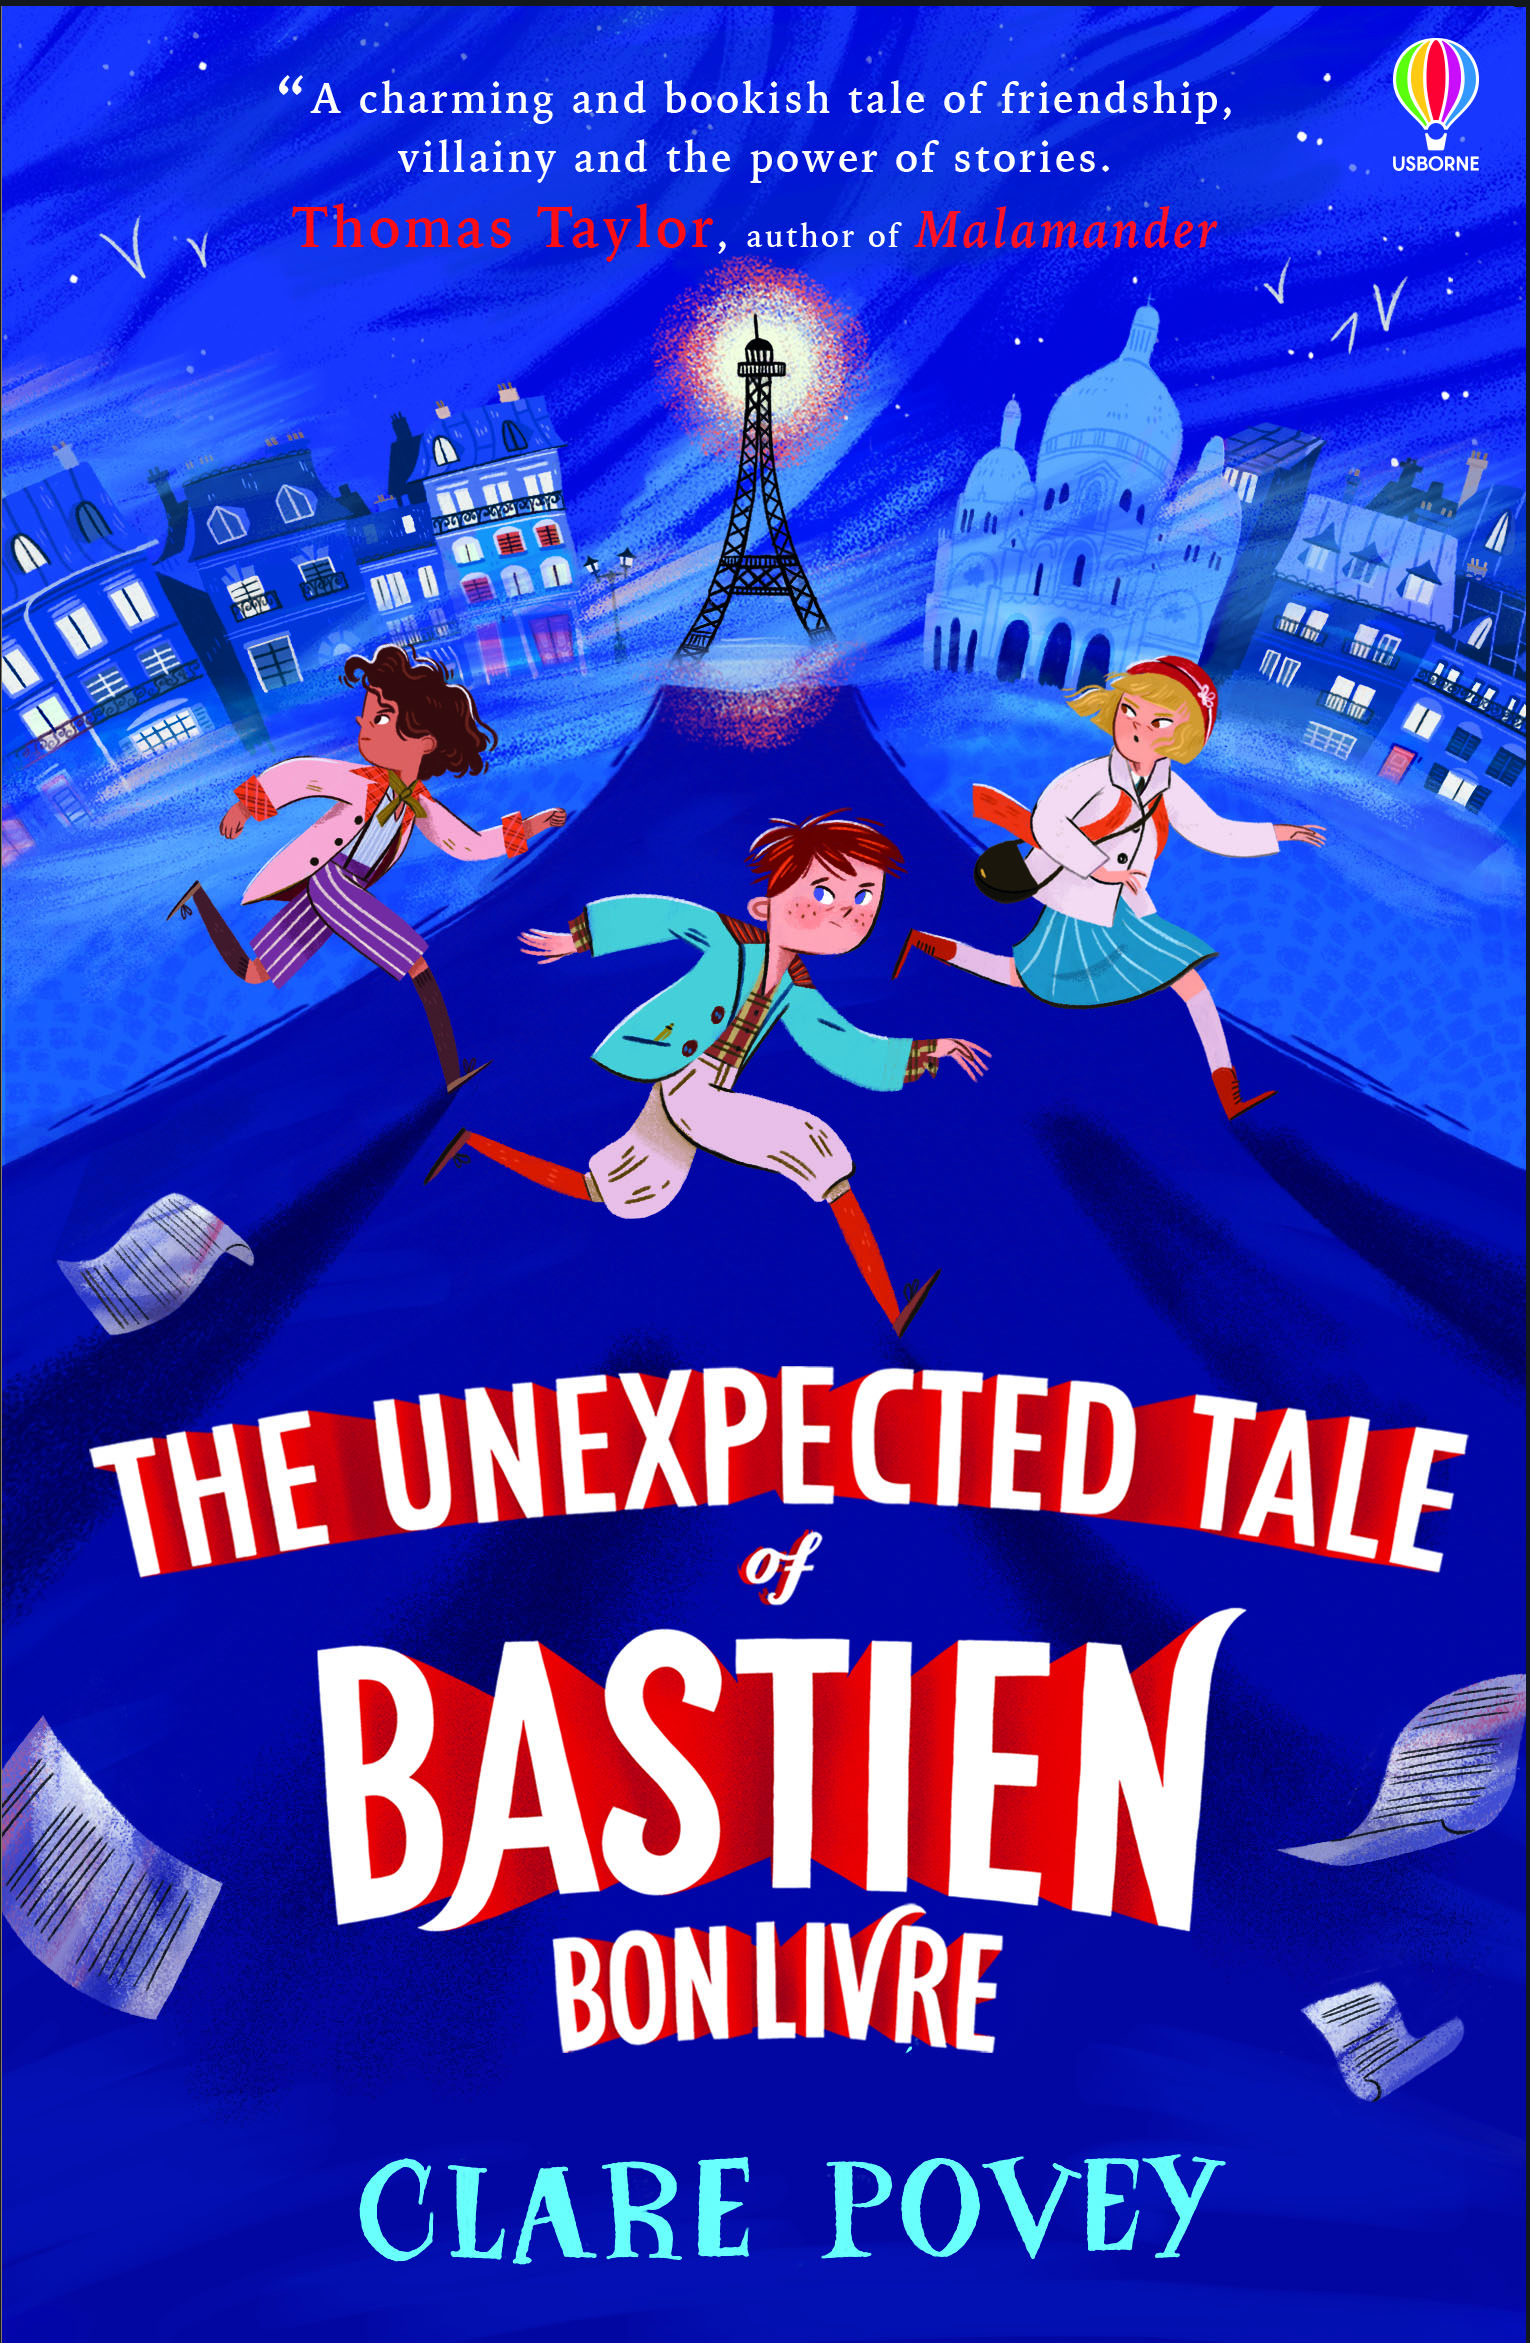 The Unexpected tale of Bastien Bonlivres/Usborne 2021.jpg